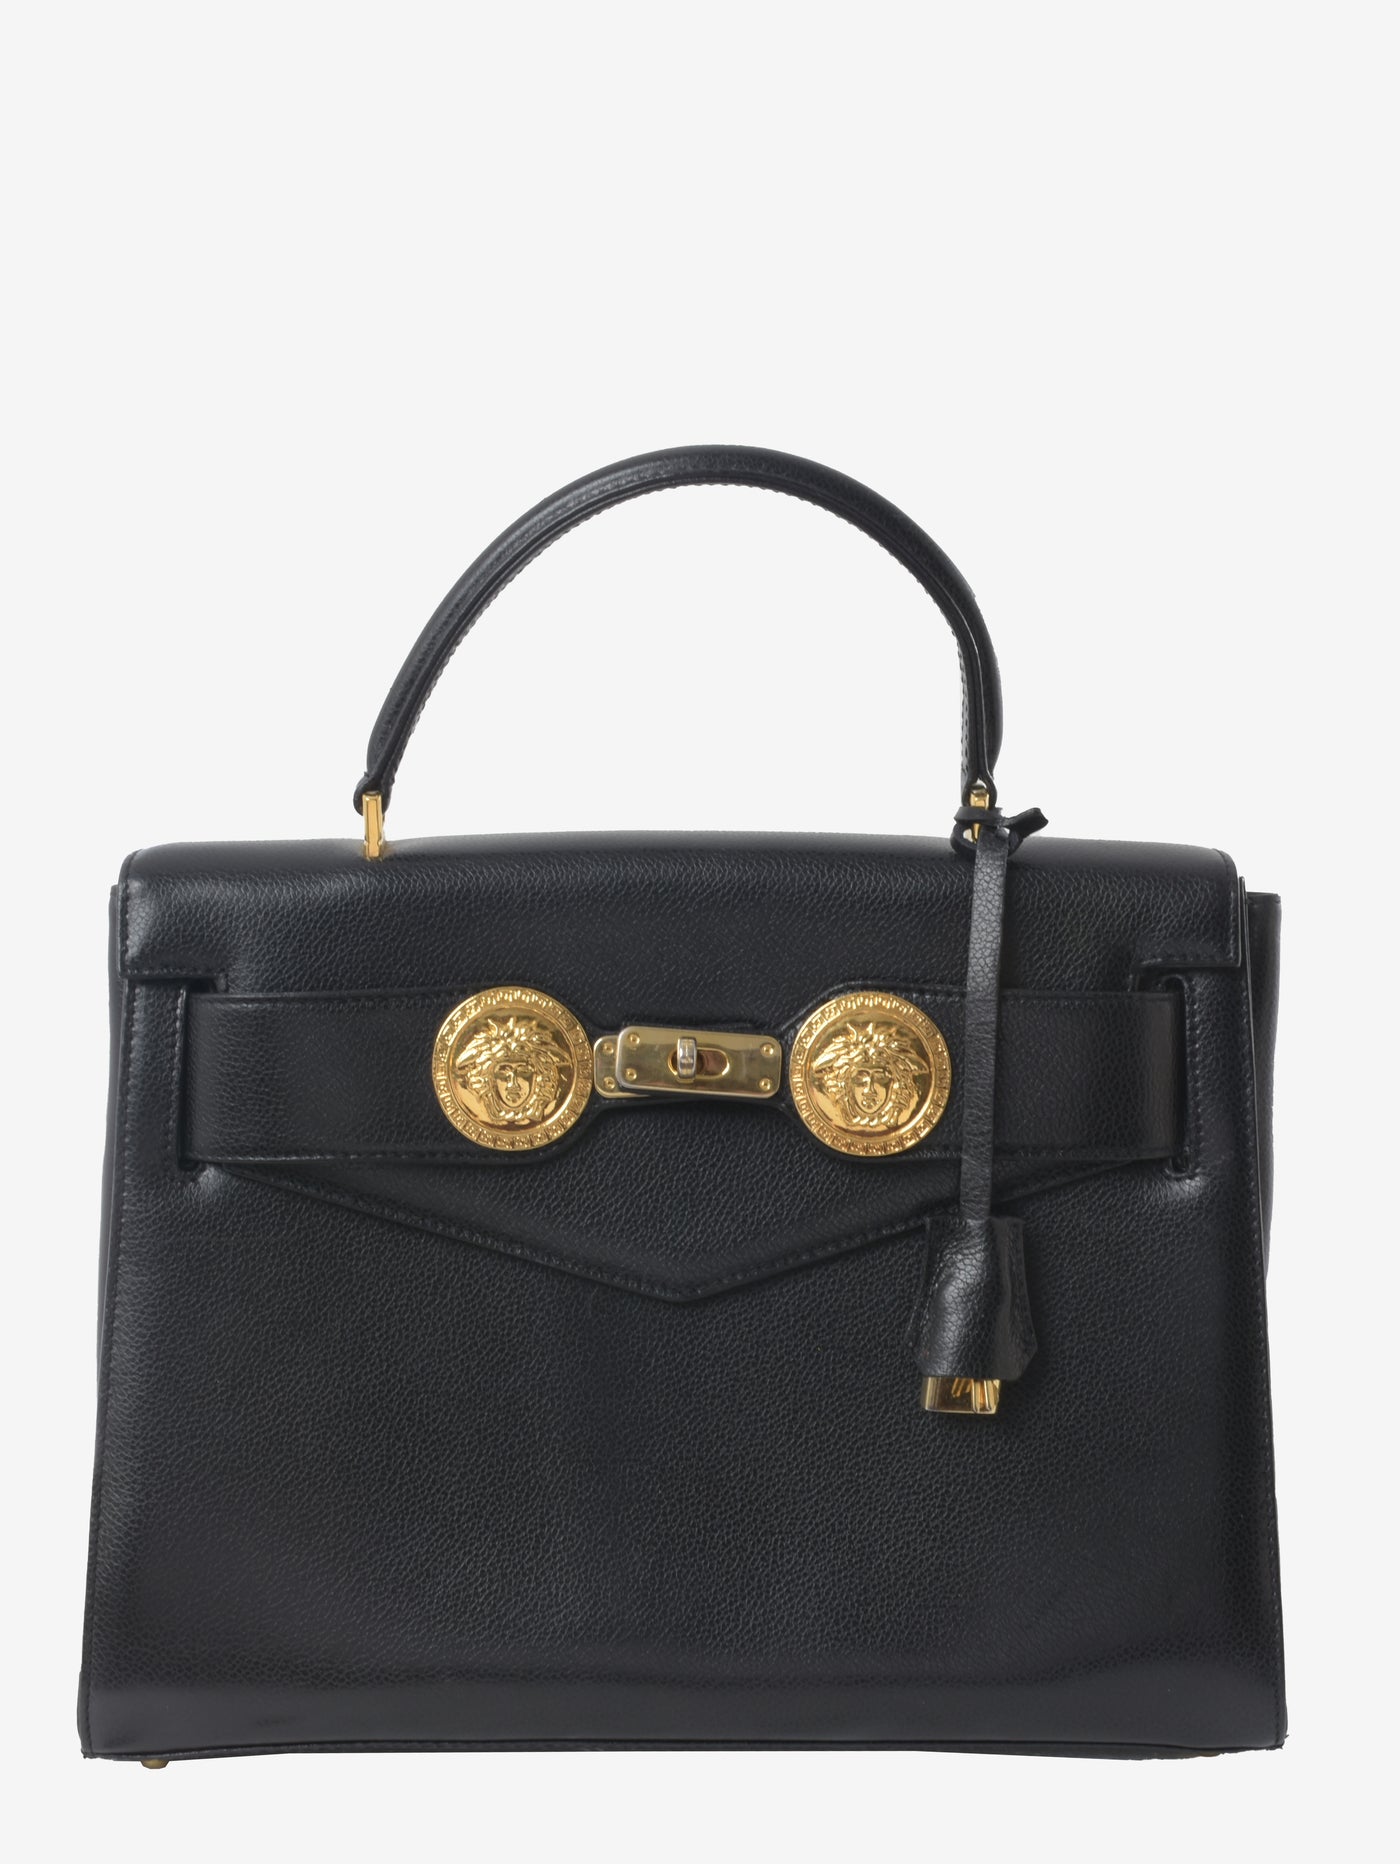 Gianni Versace Medusa Handbag